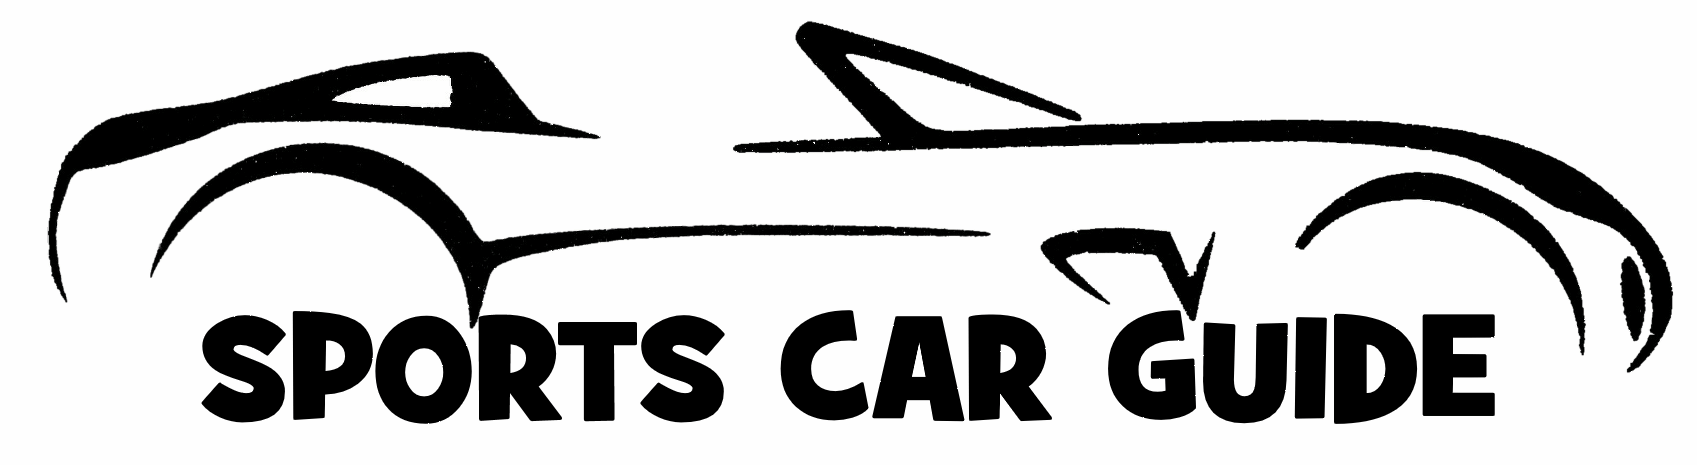 Sports Car Guide Logo crop